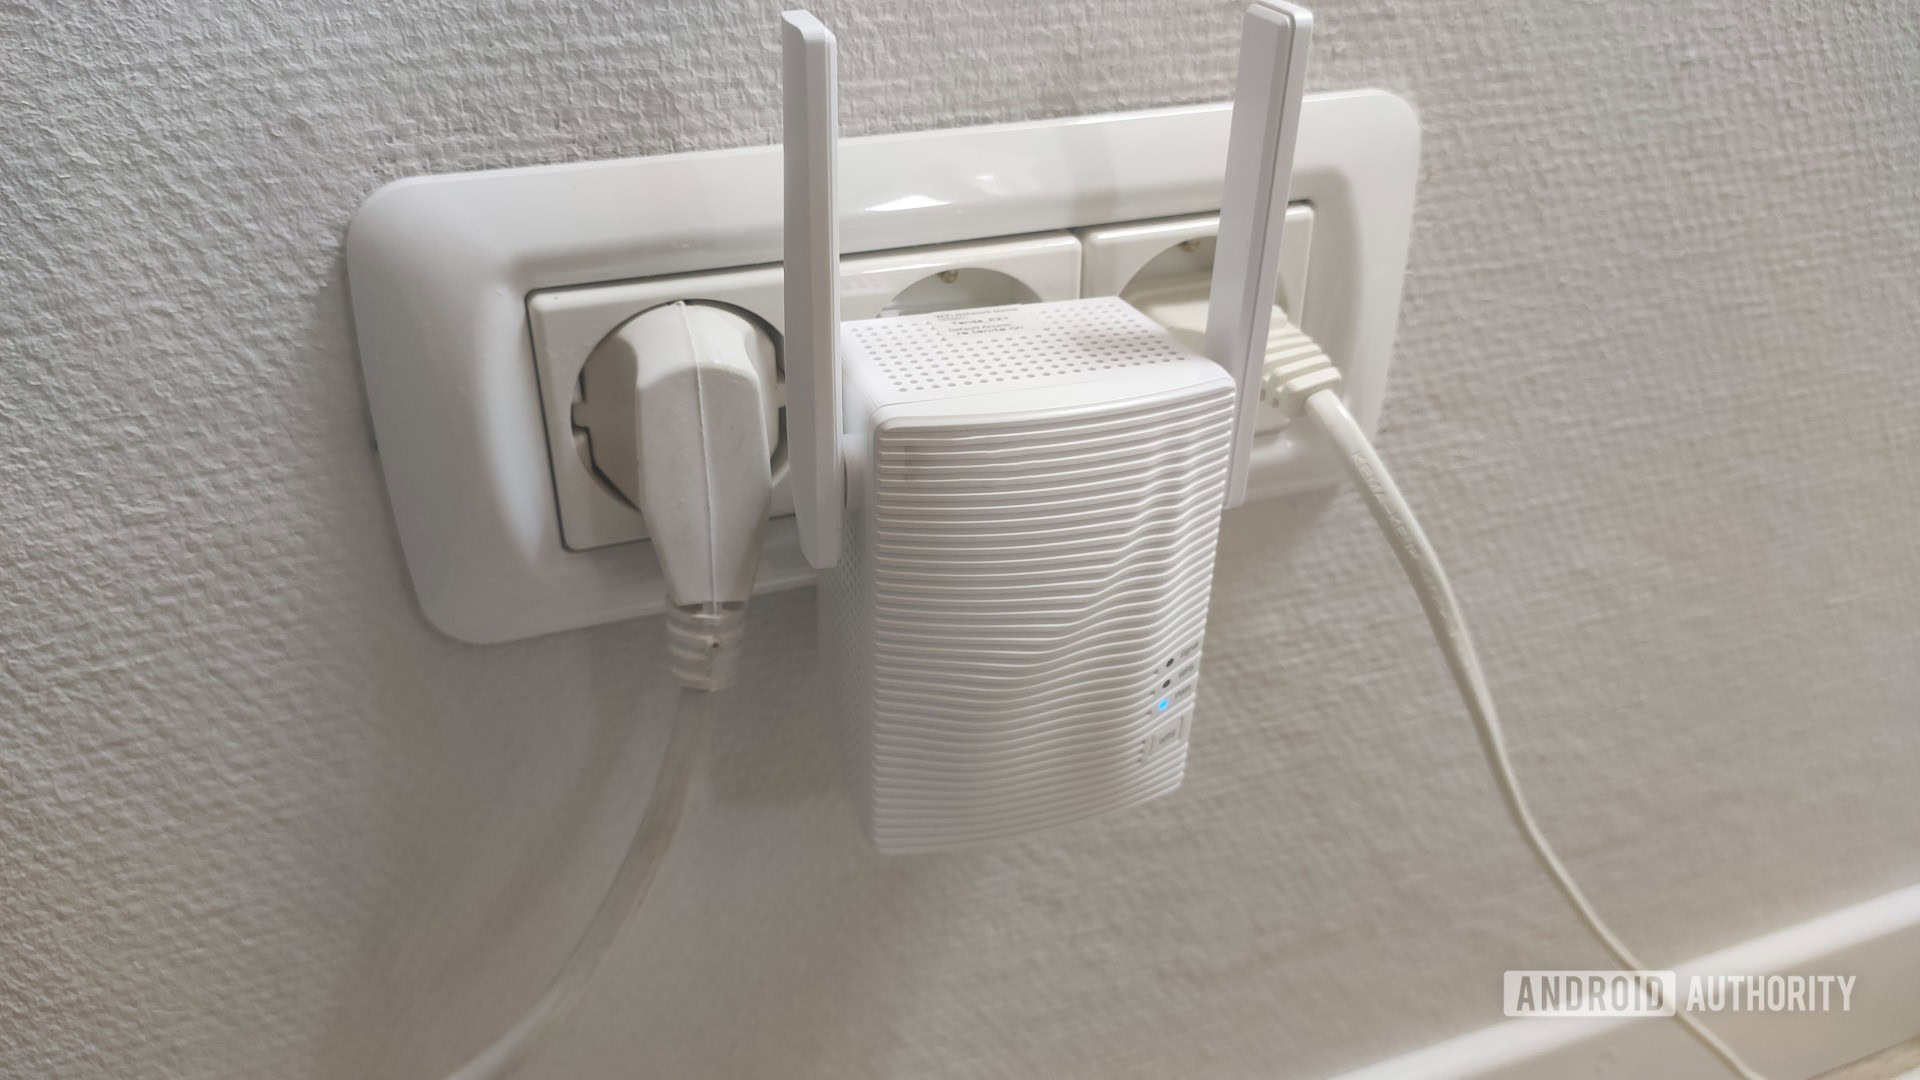 plugged into wall socket